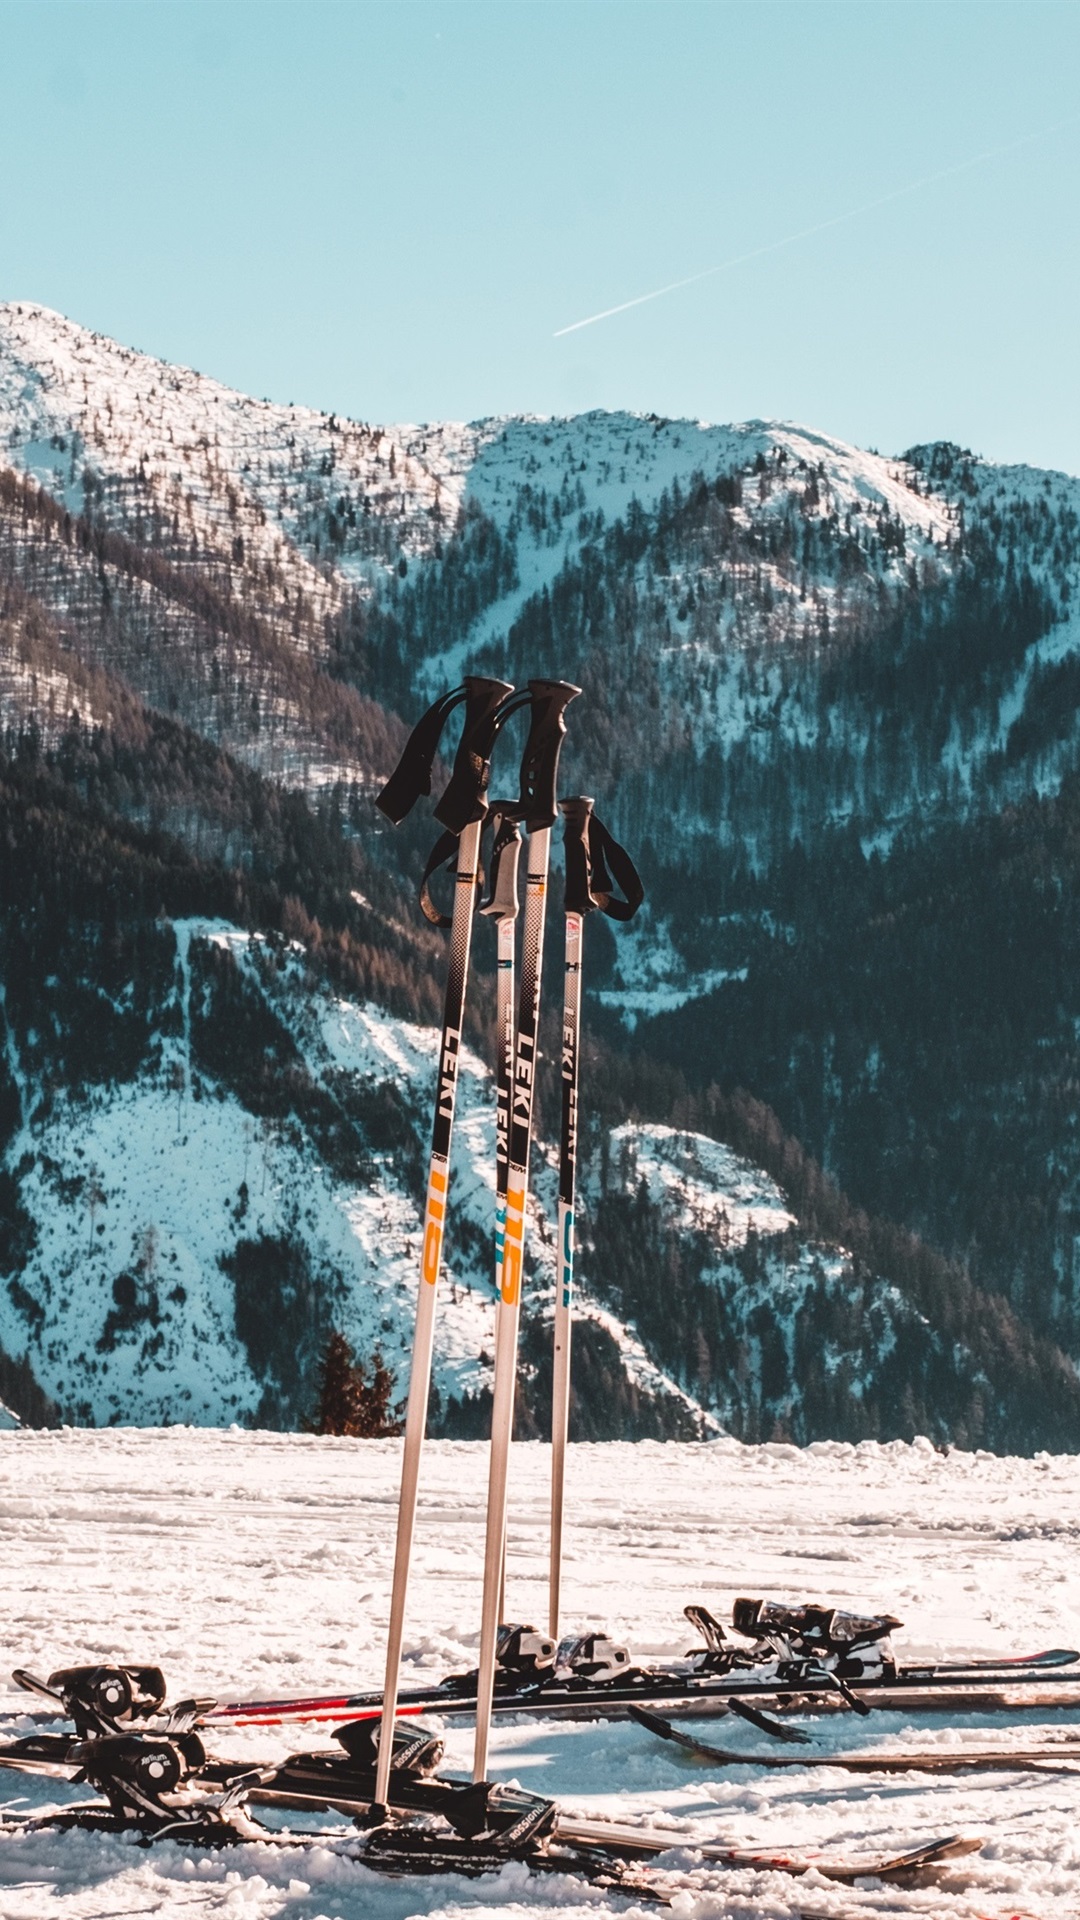 Iphone Wallpaper Ski Board, Snow, Mountains - Mountain Iphone Wallpaper Ski - HD Wallpaper 